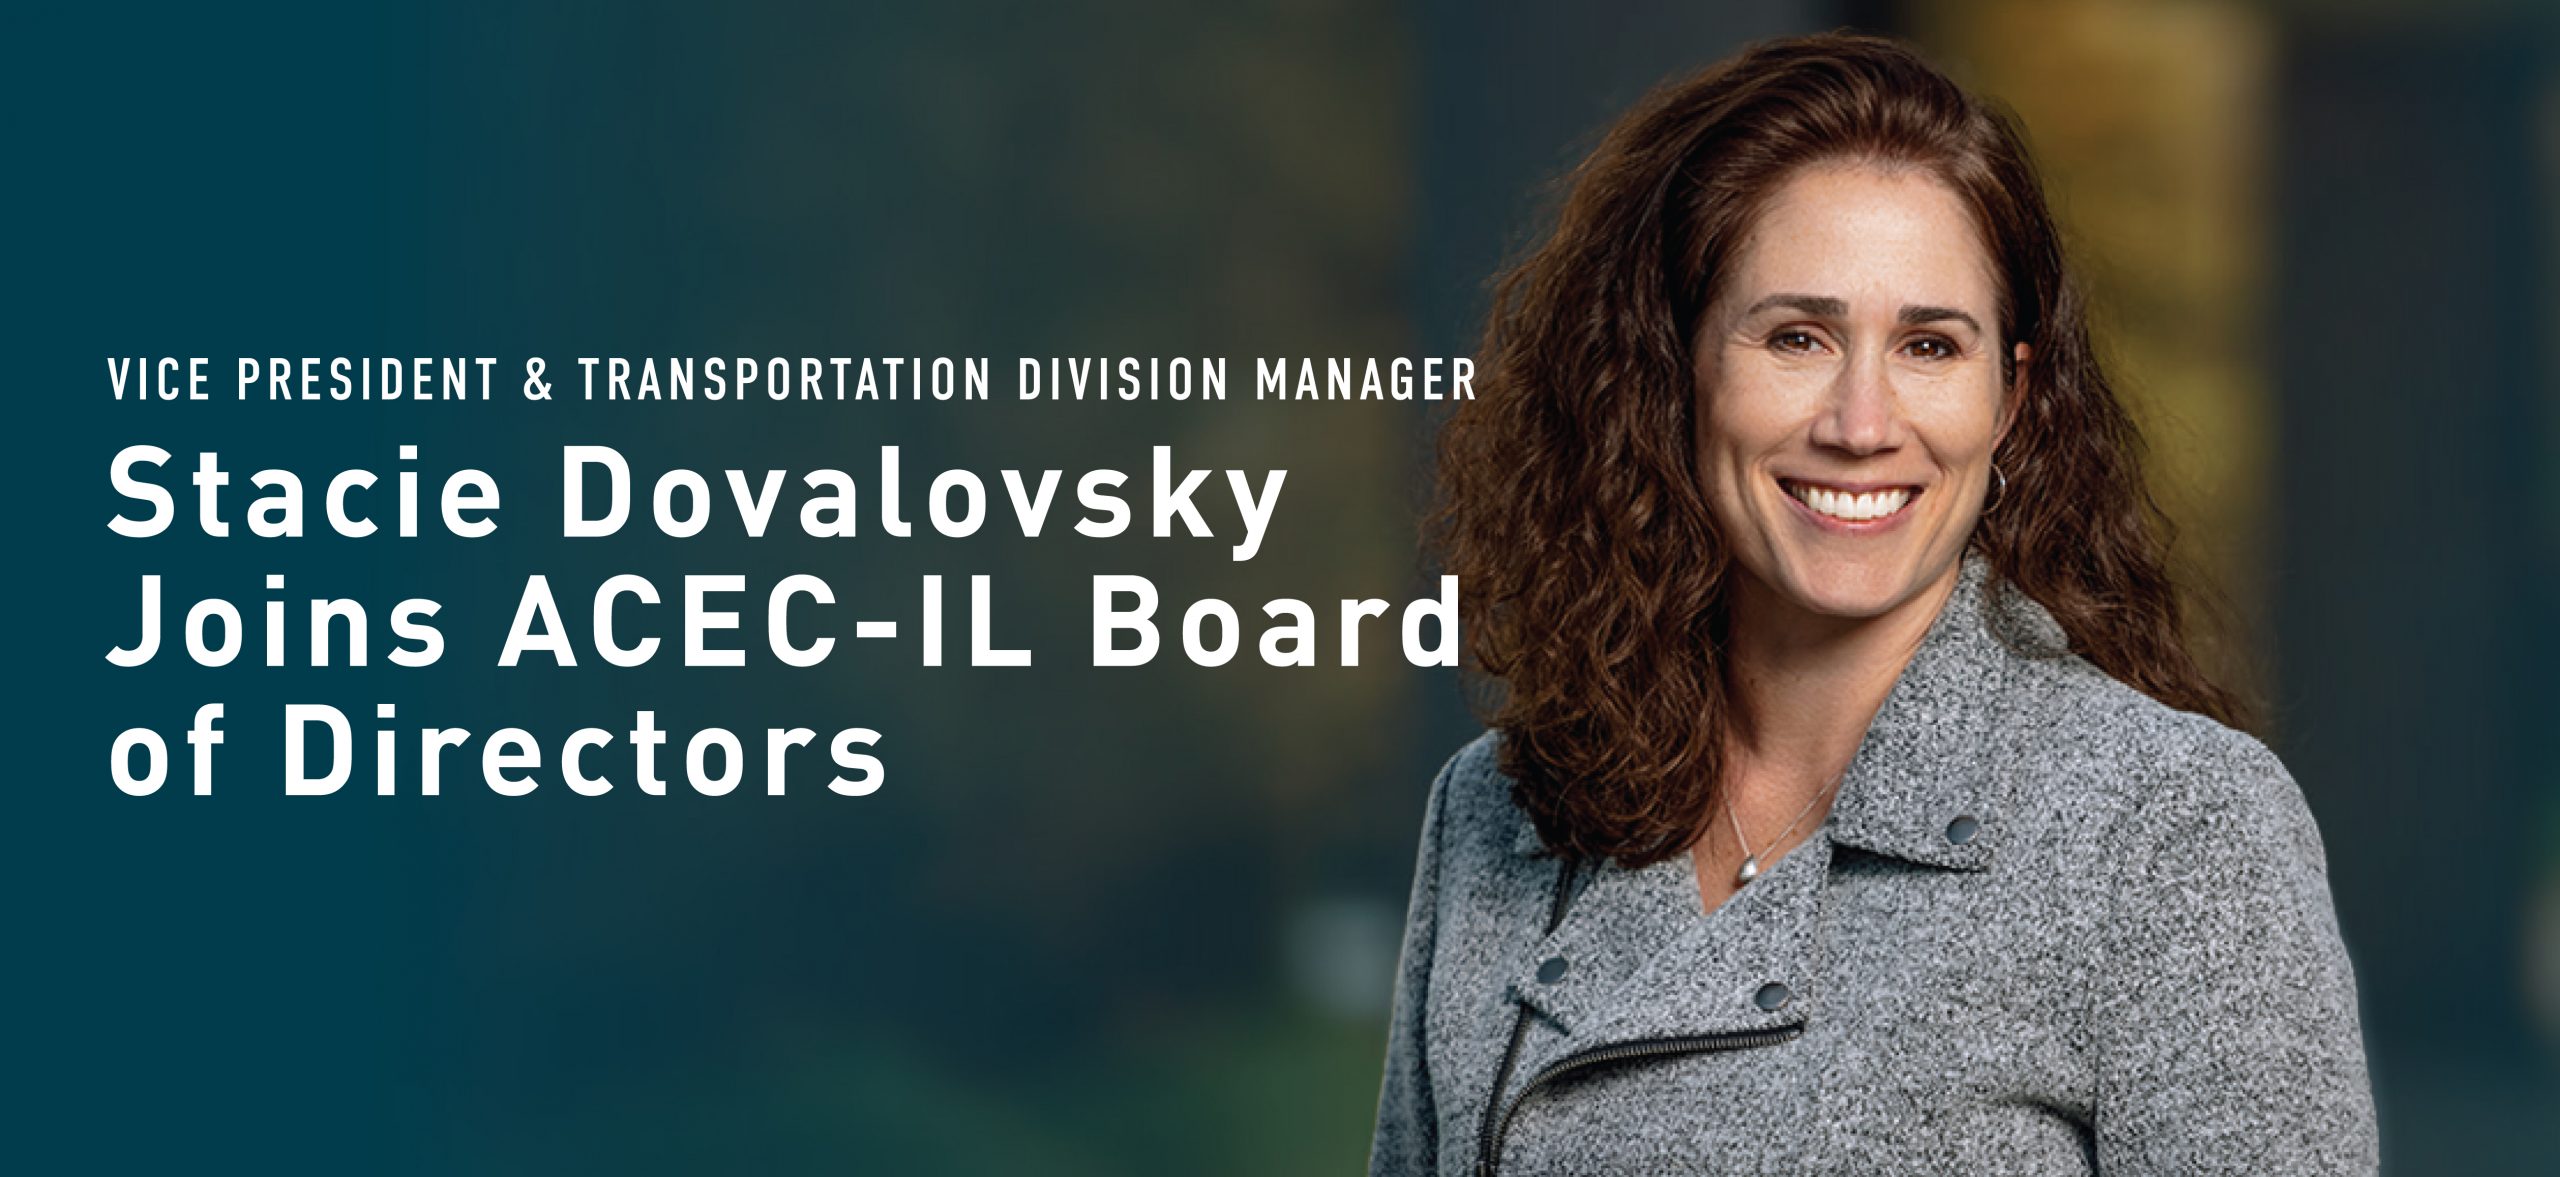 Stacie Dovalovsky Joins ACEC-IL Board of Directors